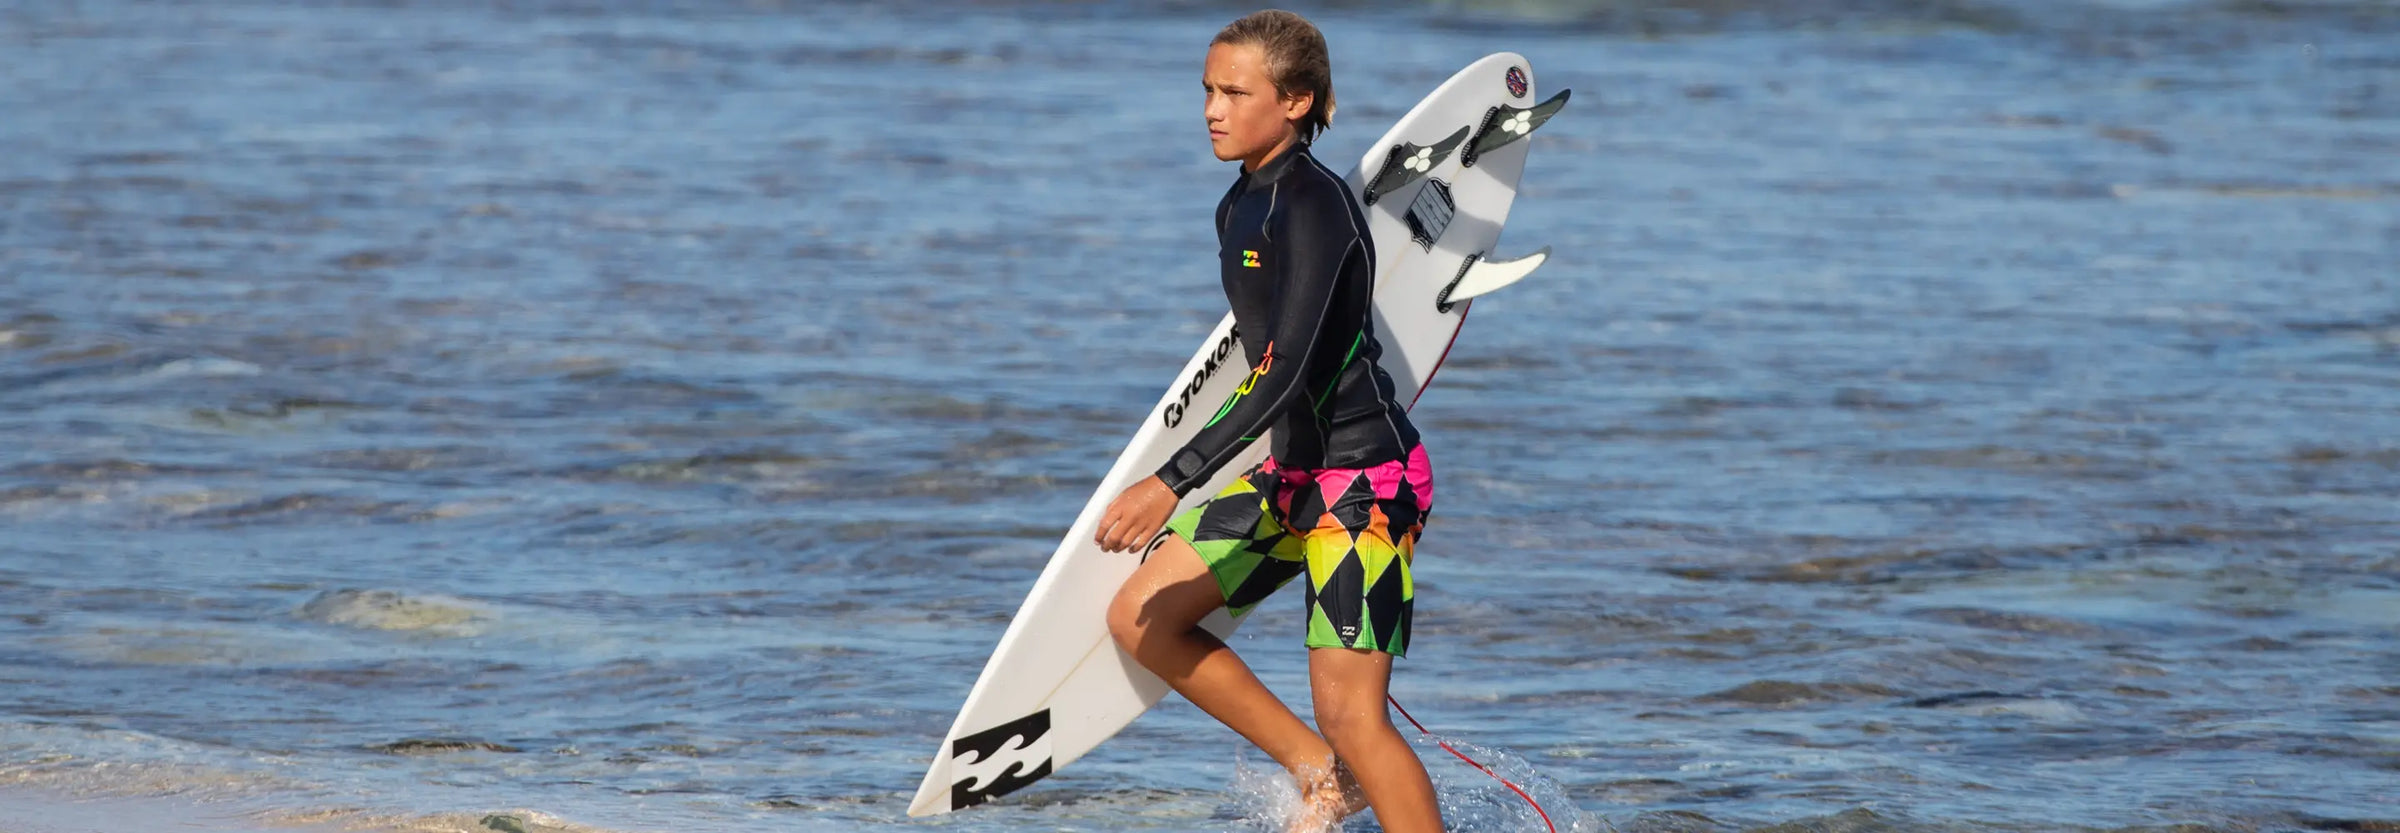 Merrik Mochkatel walking on beach with HIC surfboard in Billabong board shorts and wetsuit